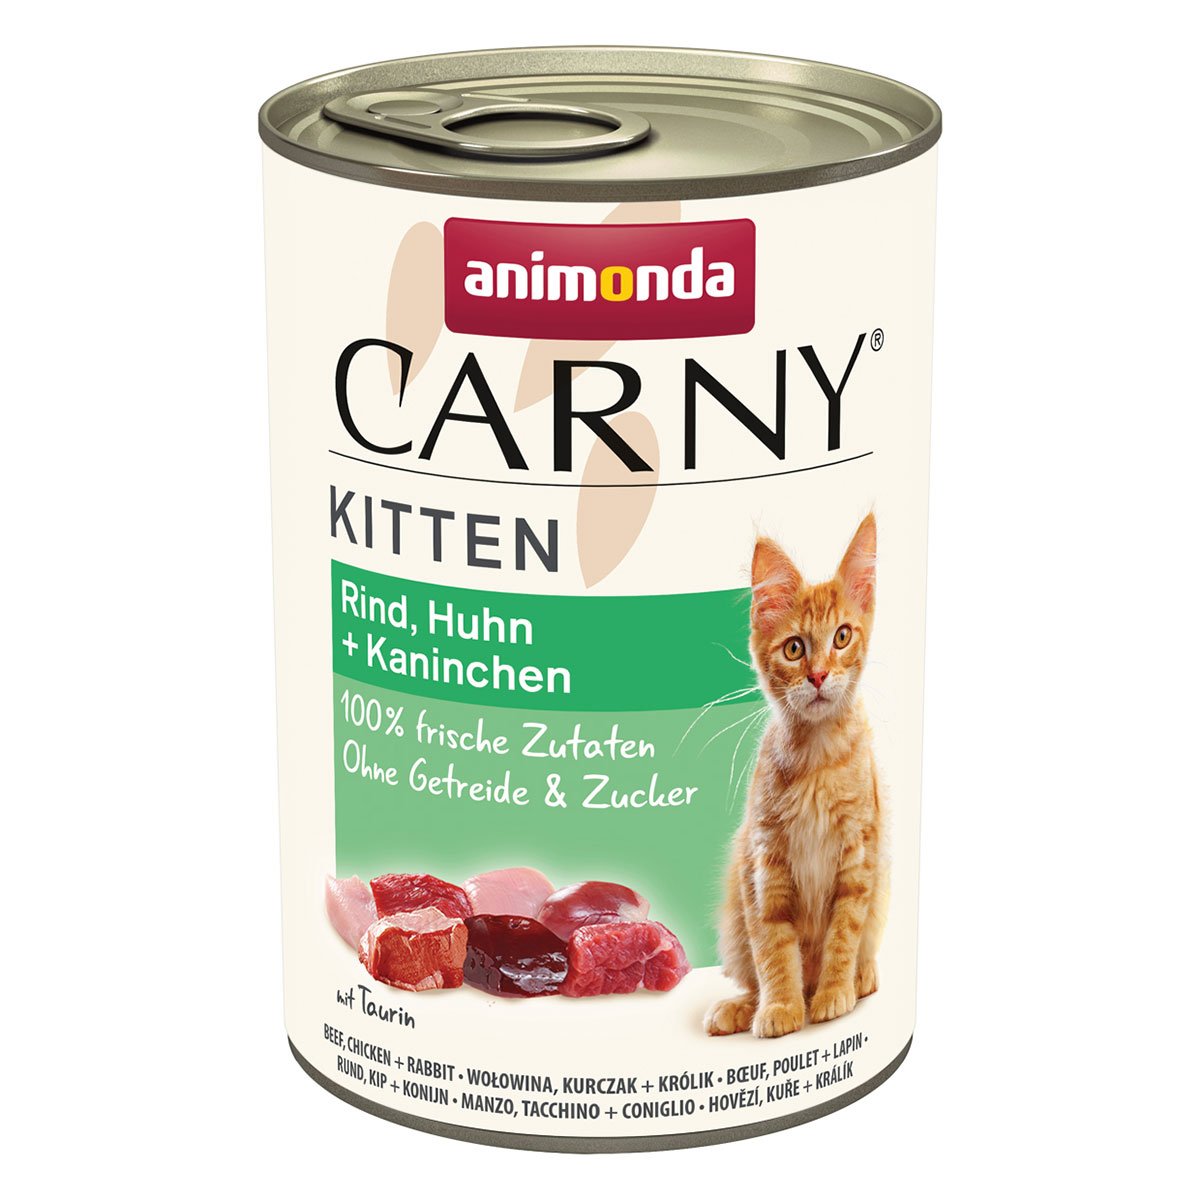 animonda Carny Kitten Rind, Huhn + Kaninchen 12x400g von animonda Carny